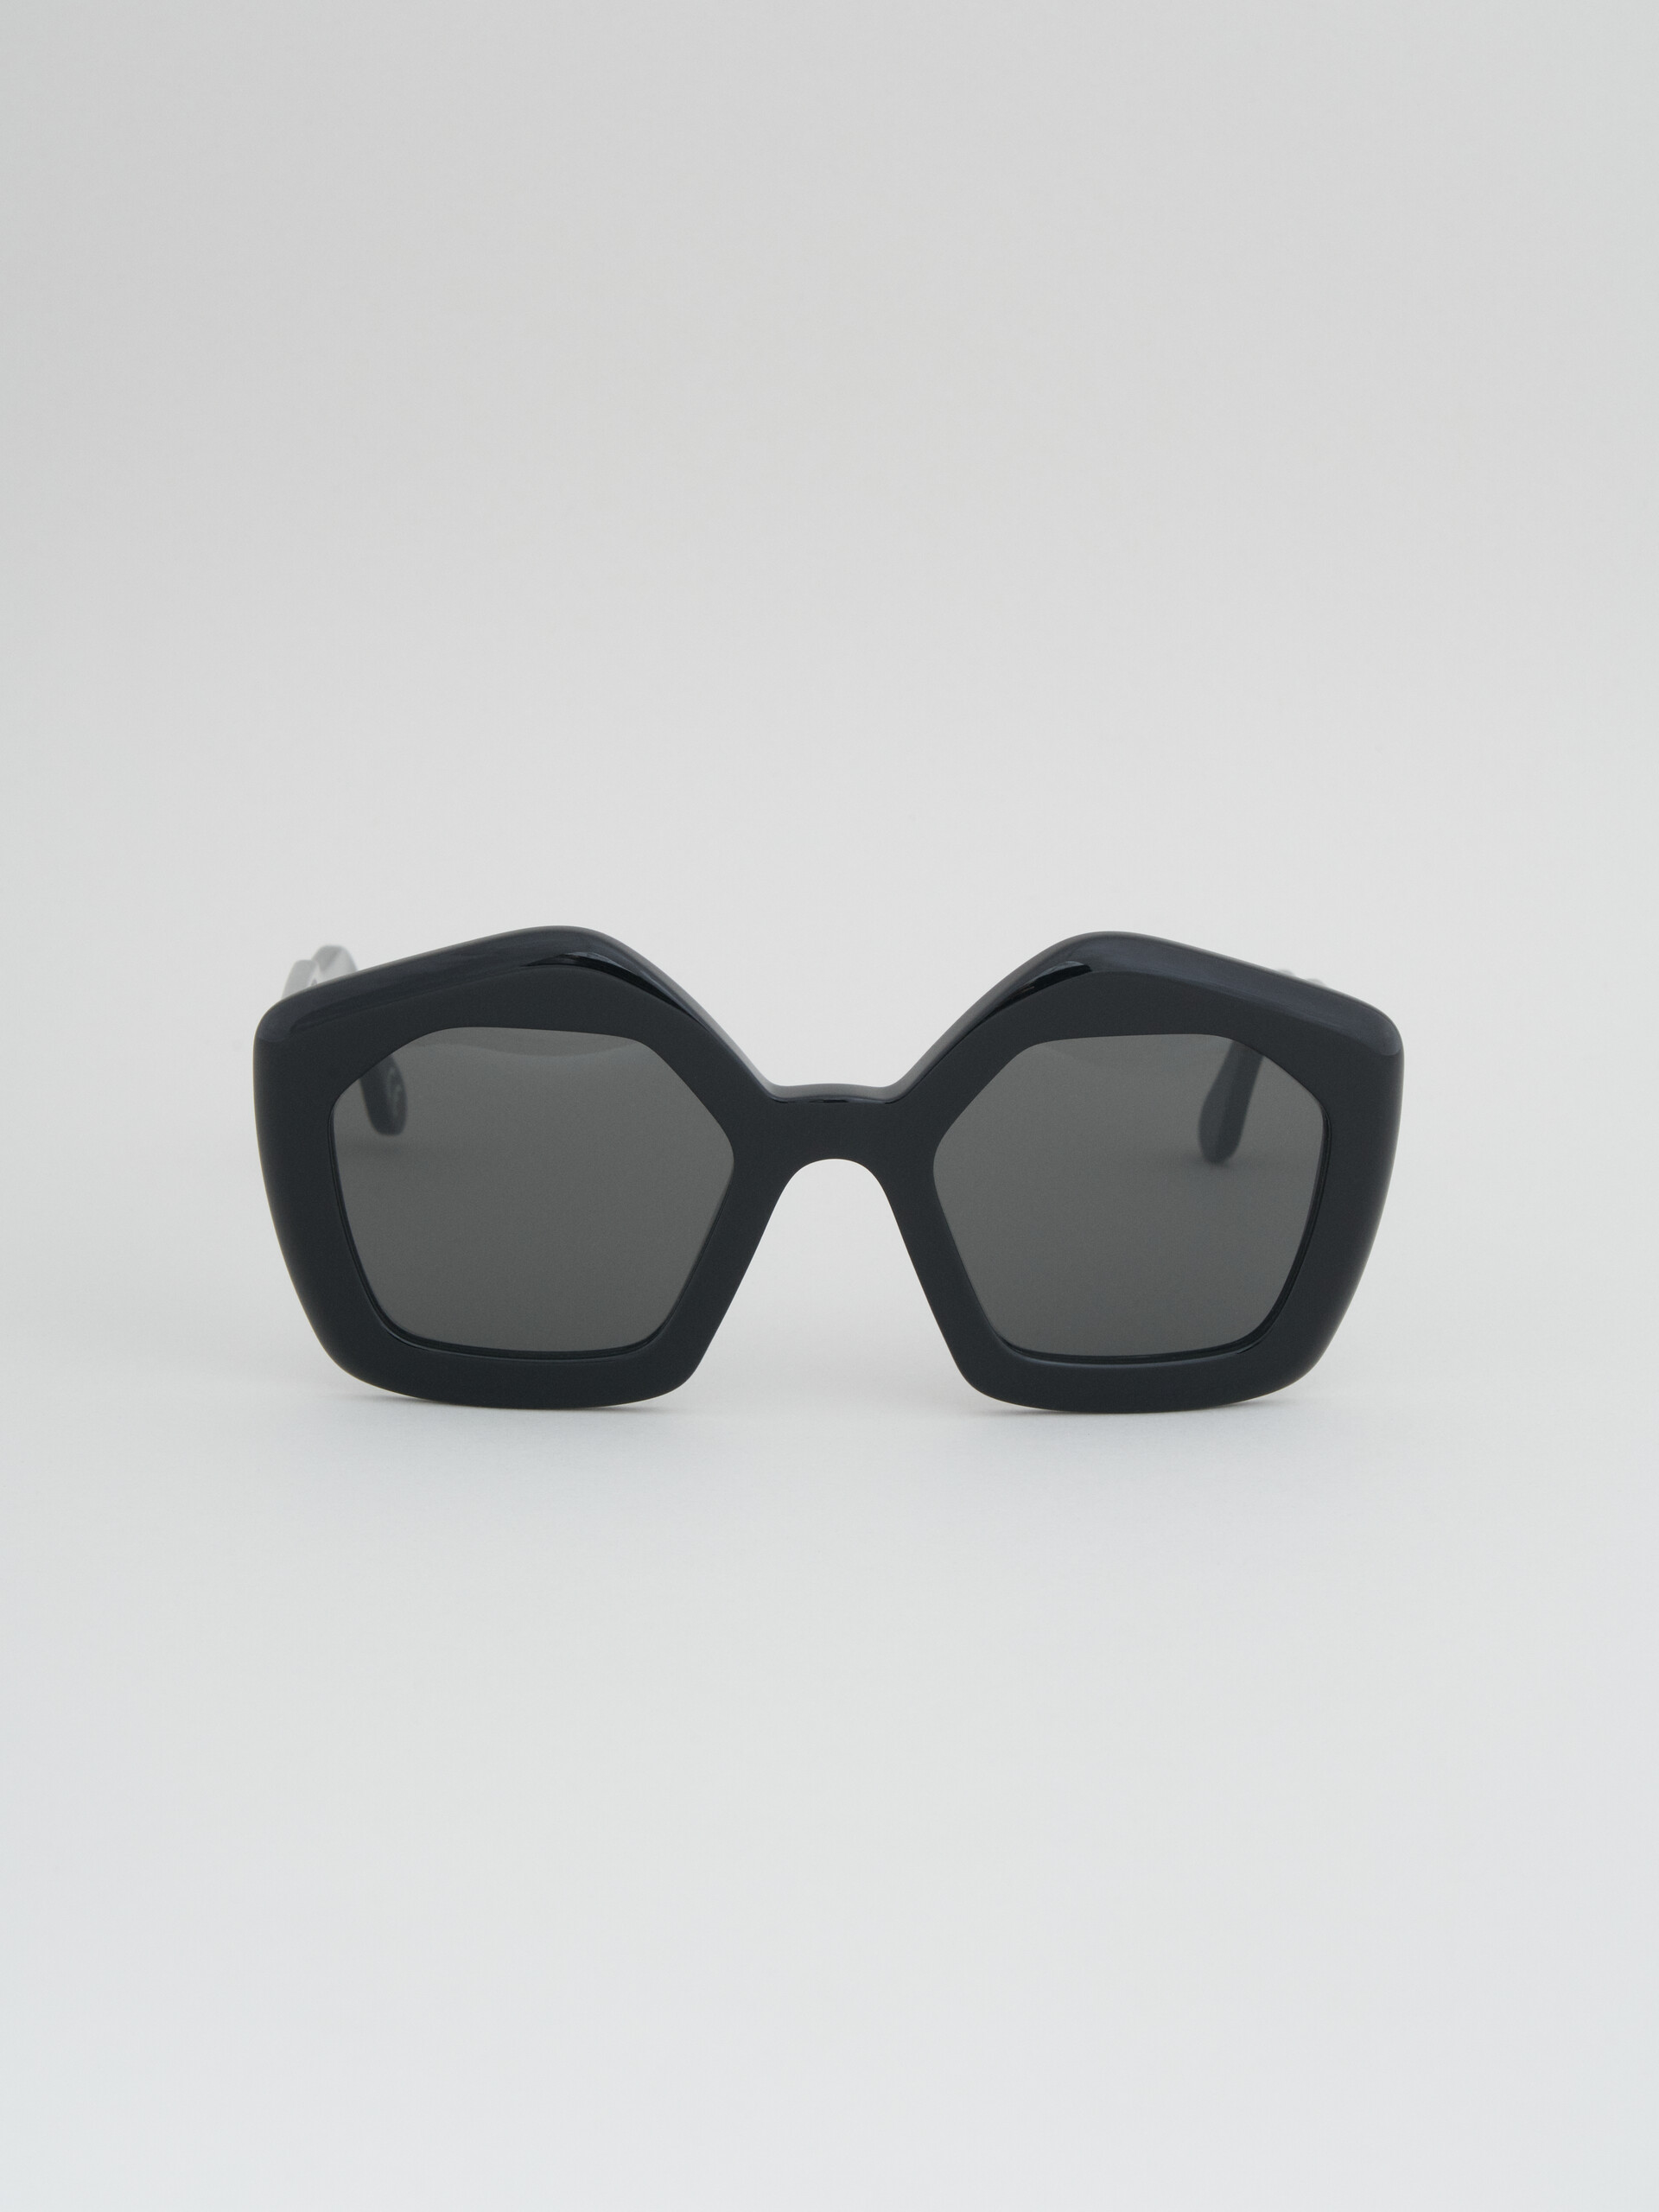 Black acetate LAUGHING WATERS sunglasses - Optical - Image 1